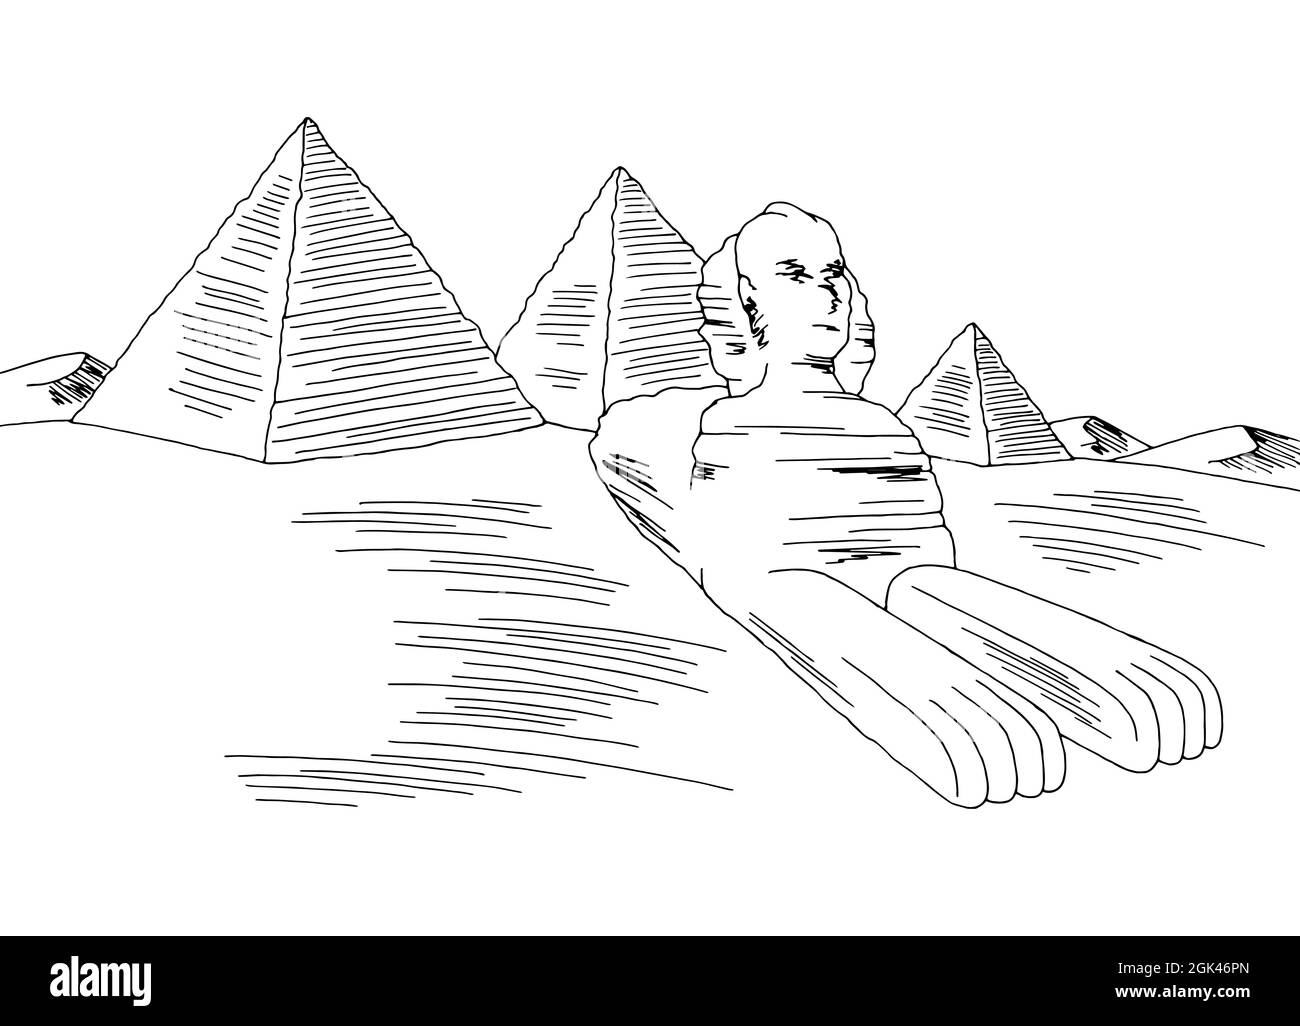 Desert pyramid graphic black white landscape sketch illustration vector Stock Vector